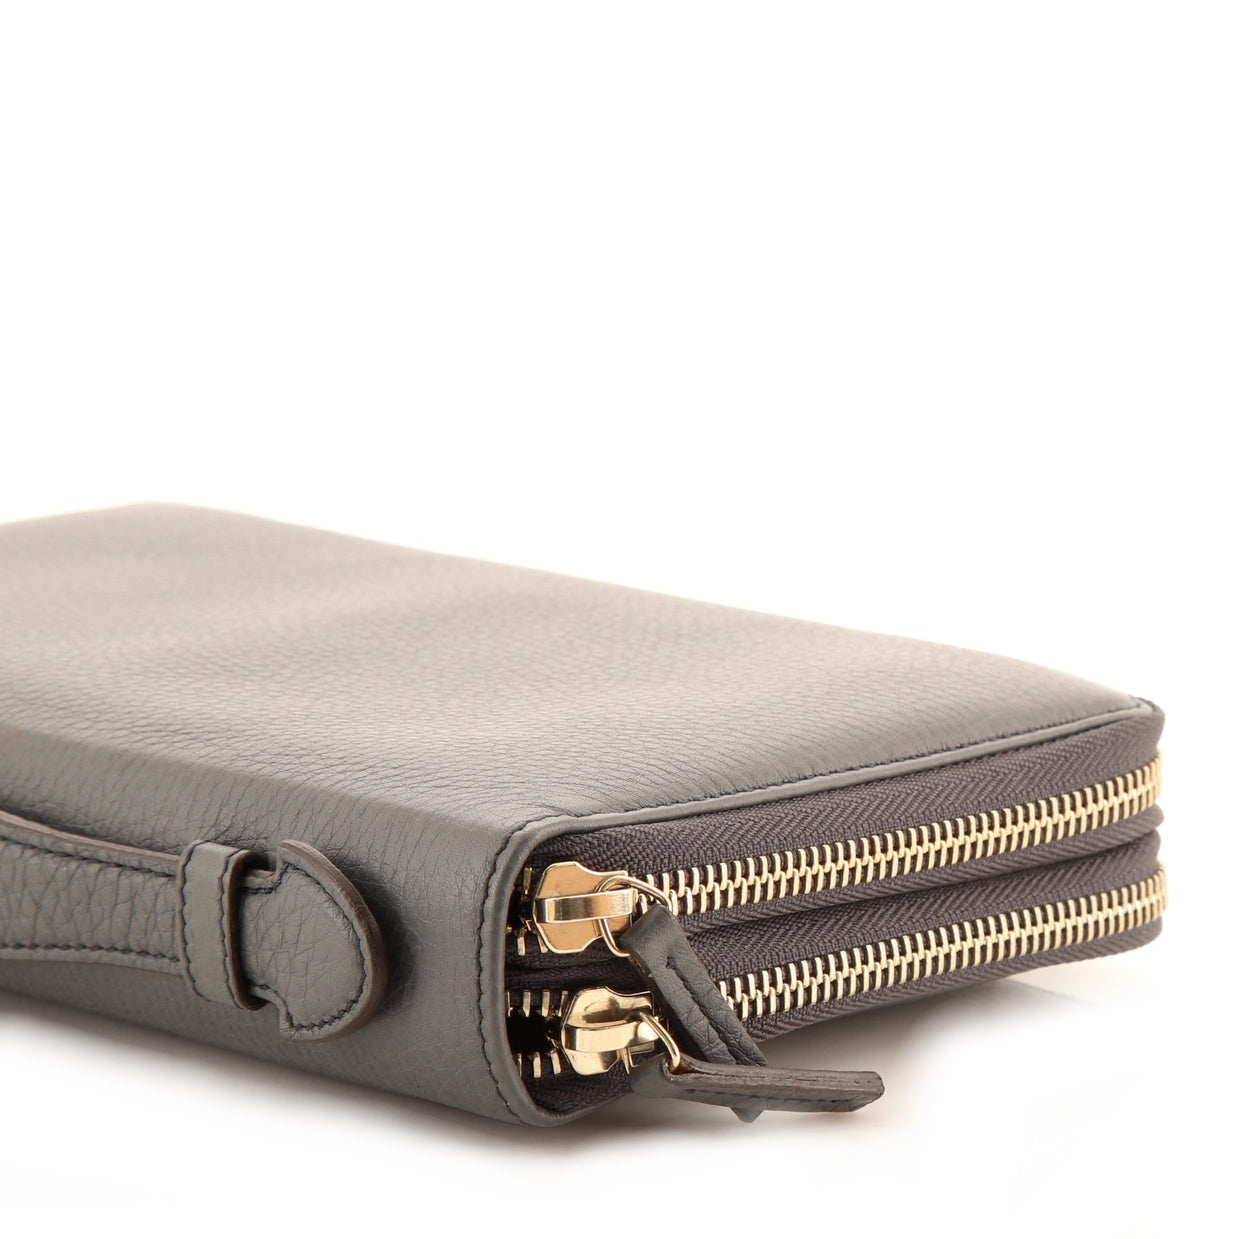 Gucci Soho Travel Organizer Wallet Leather Gray 850312